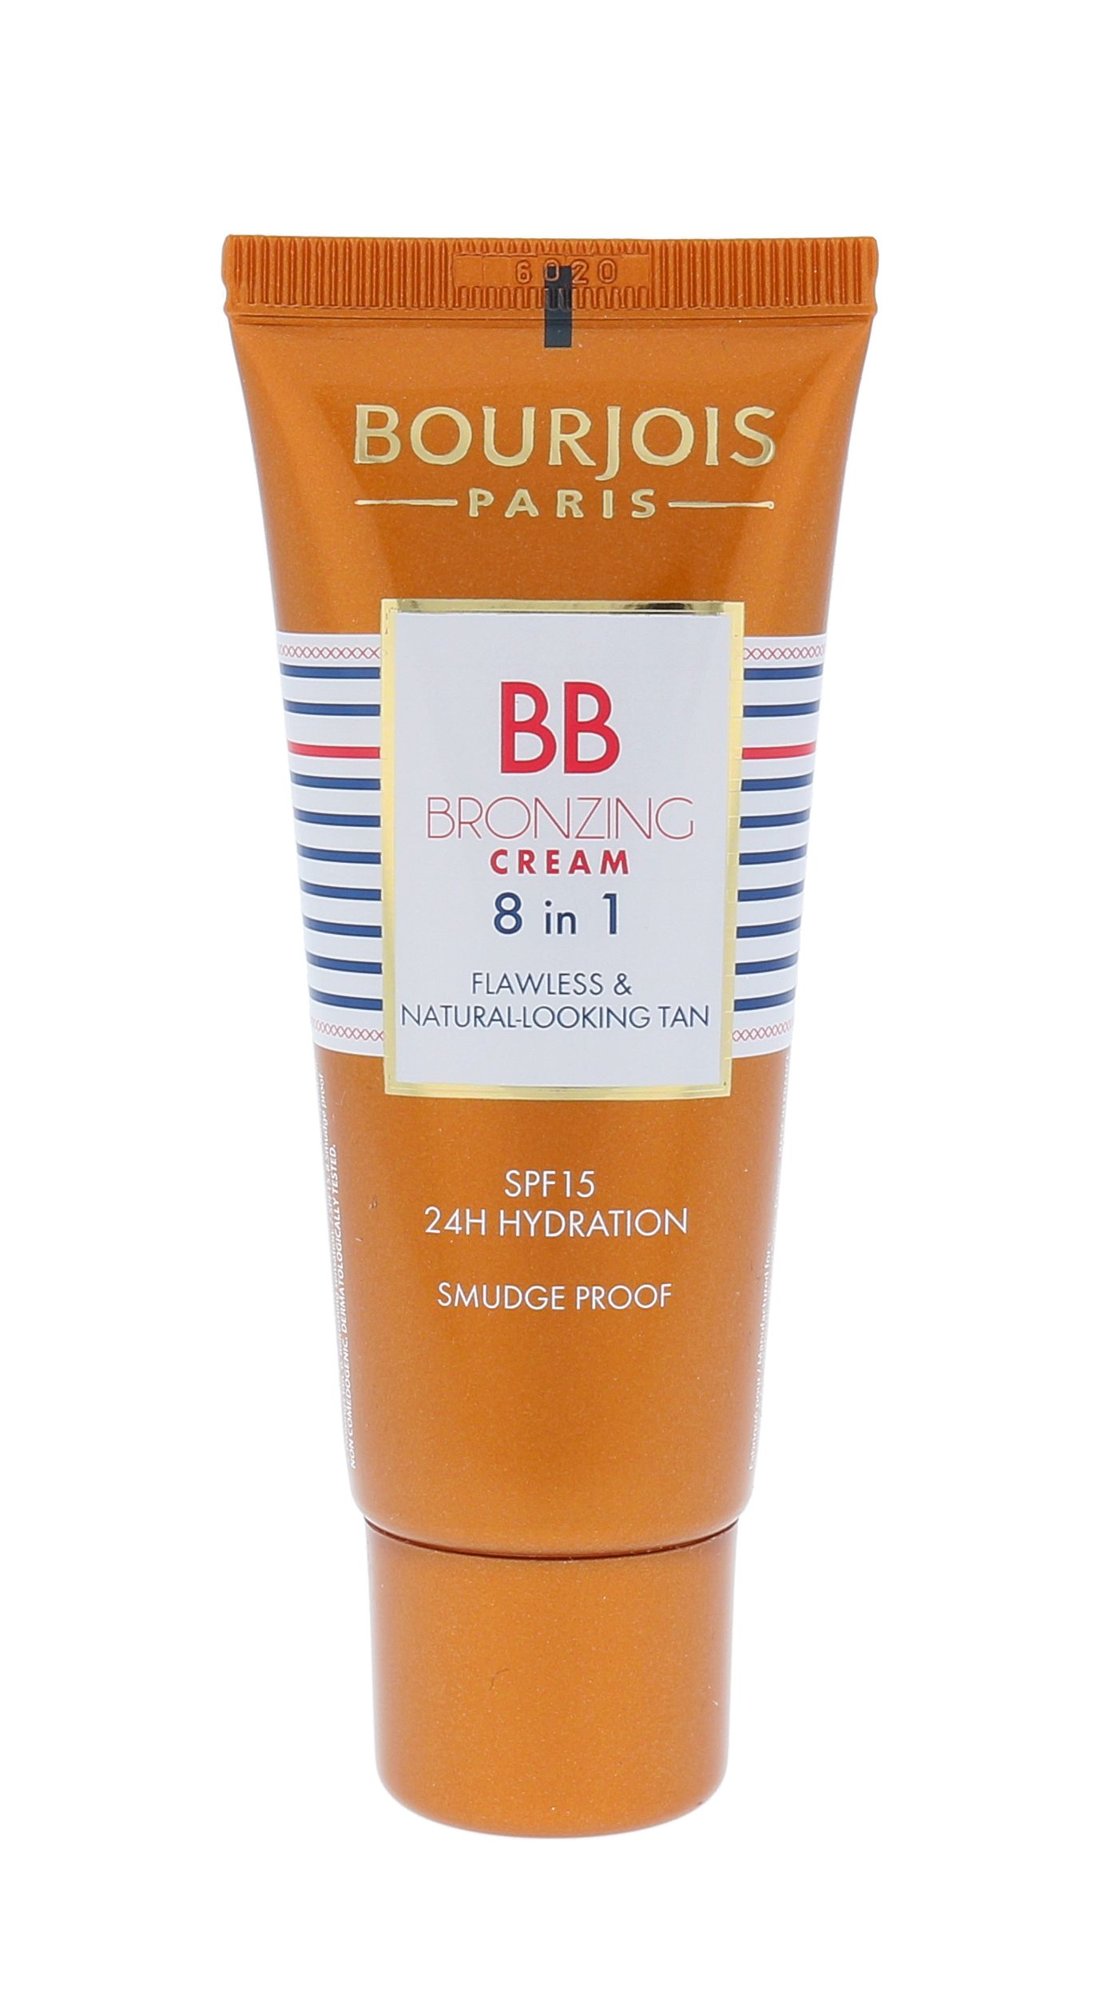 BOURJOIS Paris BB Bronzing Cream 8in1 BB kremas